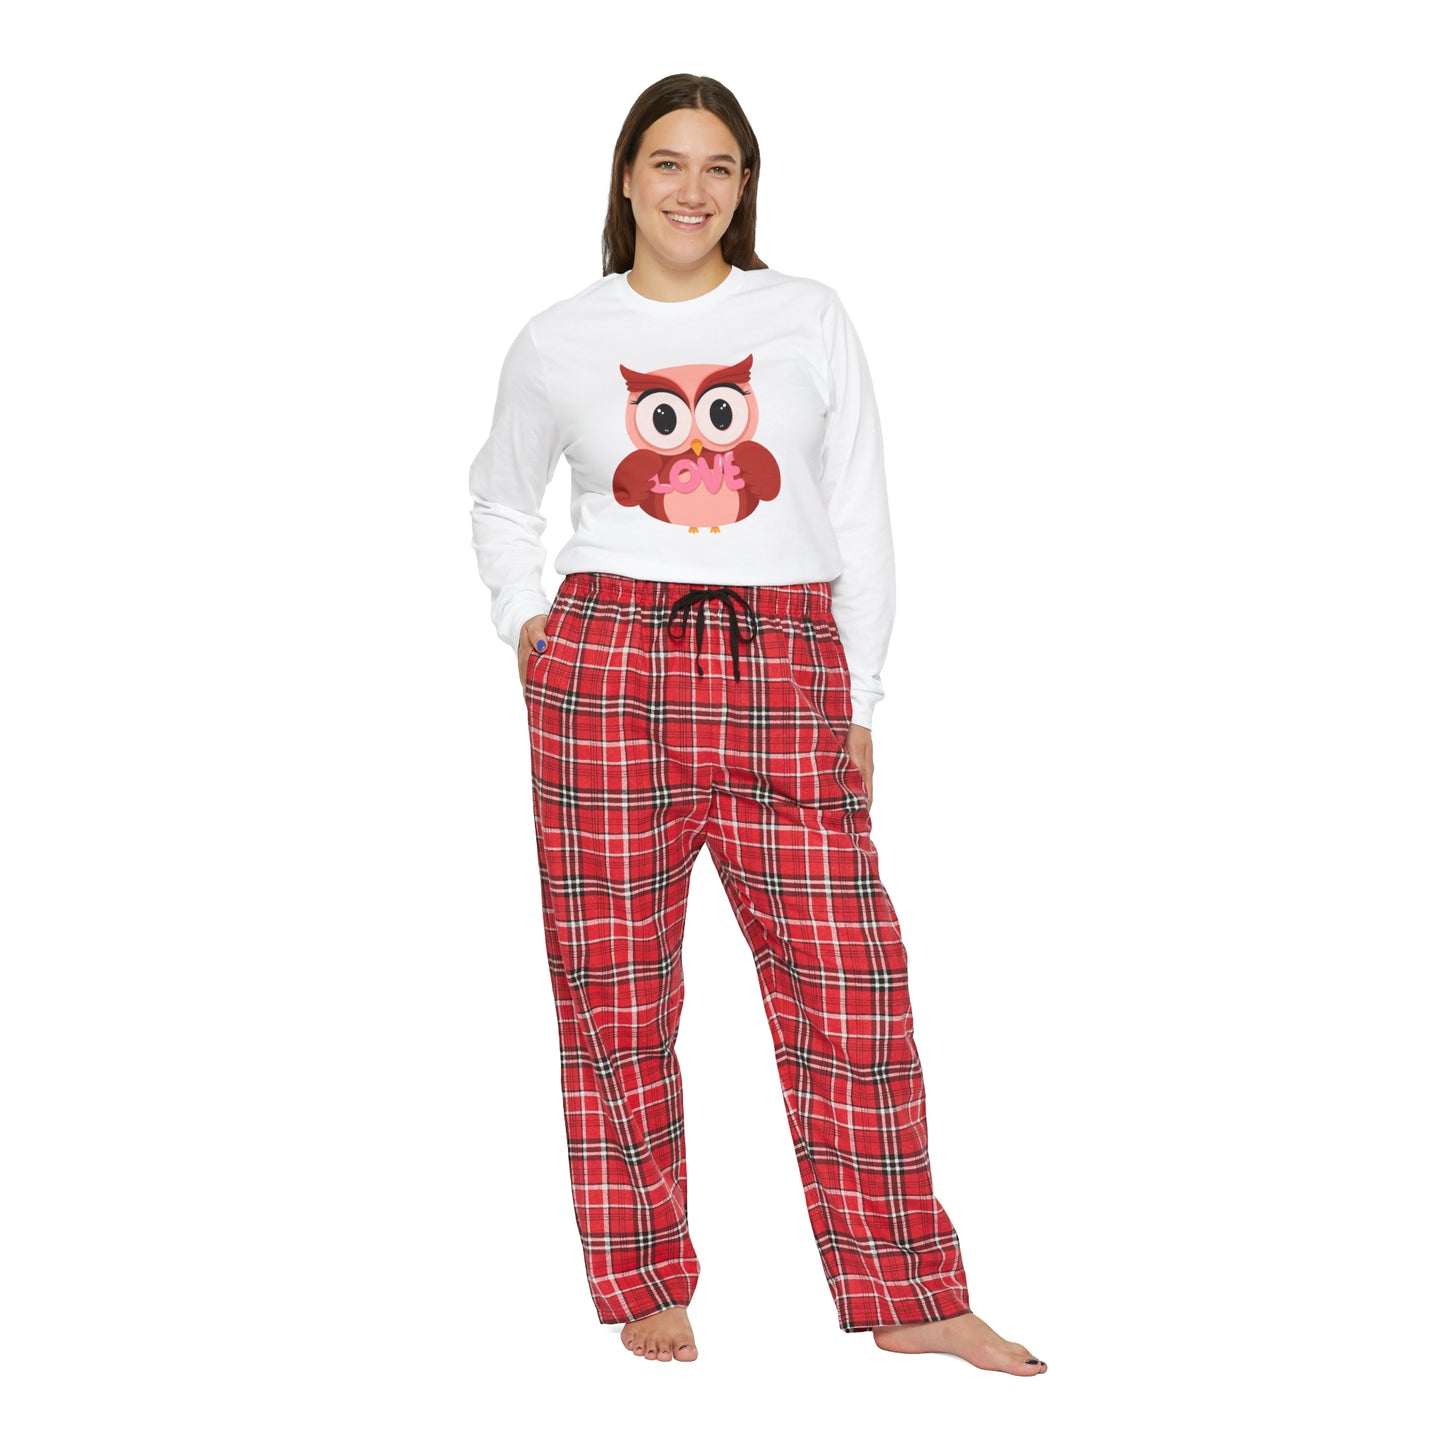 Owl "Love" Women's Long Sleeve Pajama Set, Adorable Pajama Set, 100% Cotton